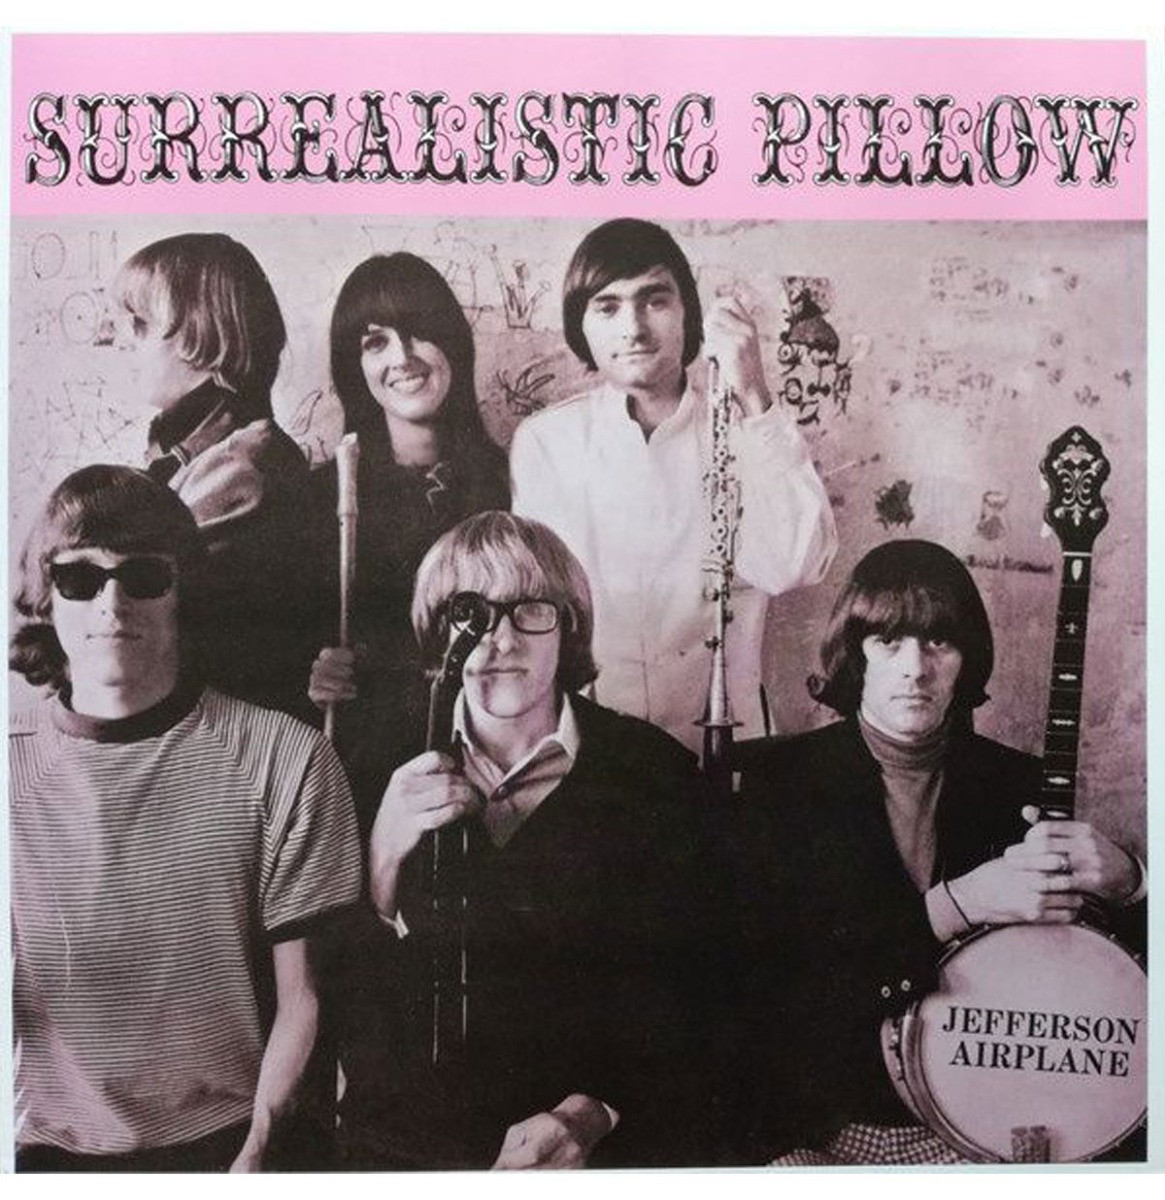 Jefferson Airplane - Surrealistic Pillow LP